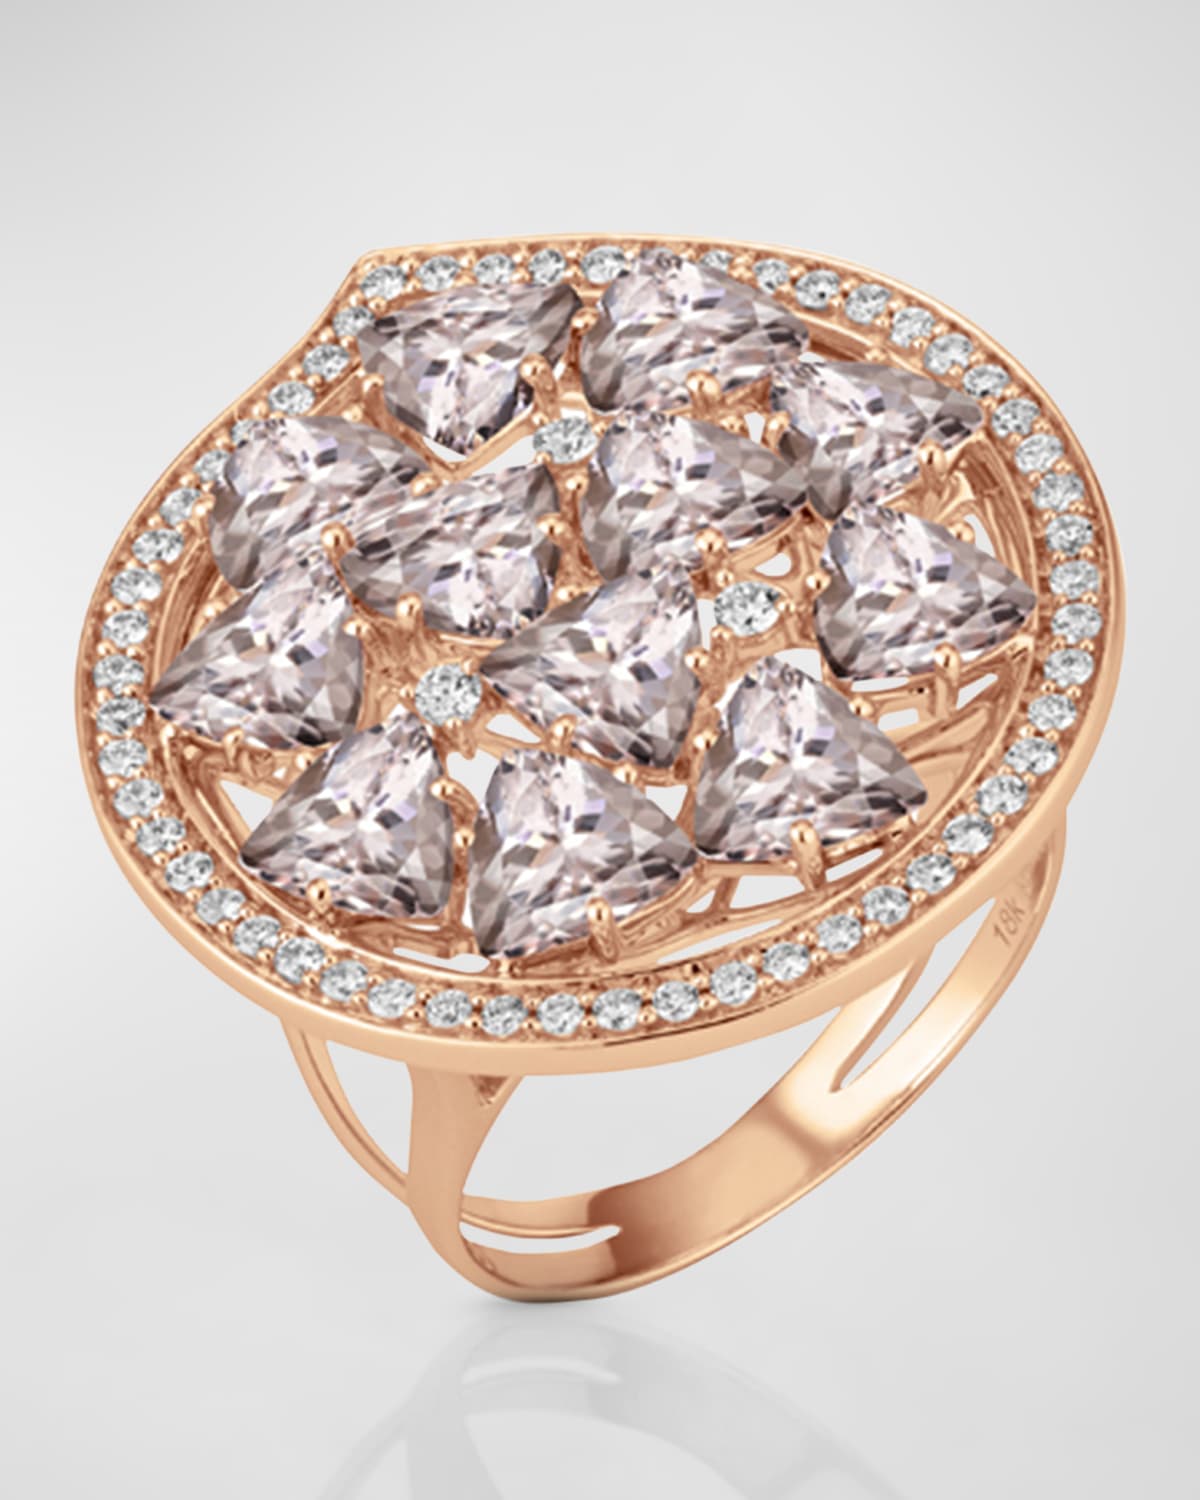 HUEB 18K MIRAGE ROSE GOLD RING WITH DIAMONDS AND ROSE MORGANITE